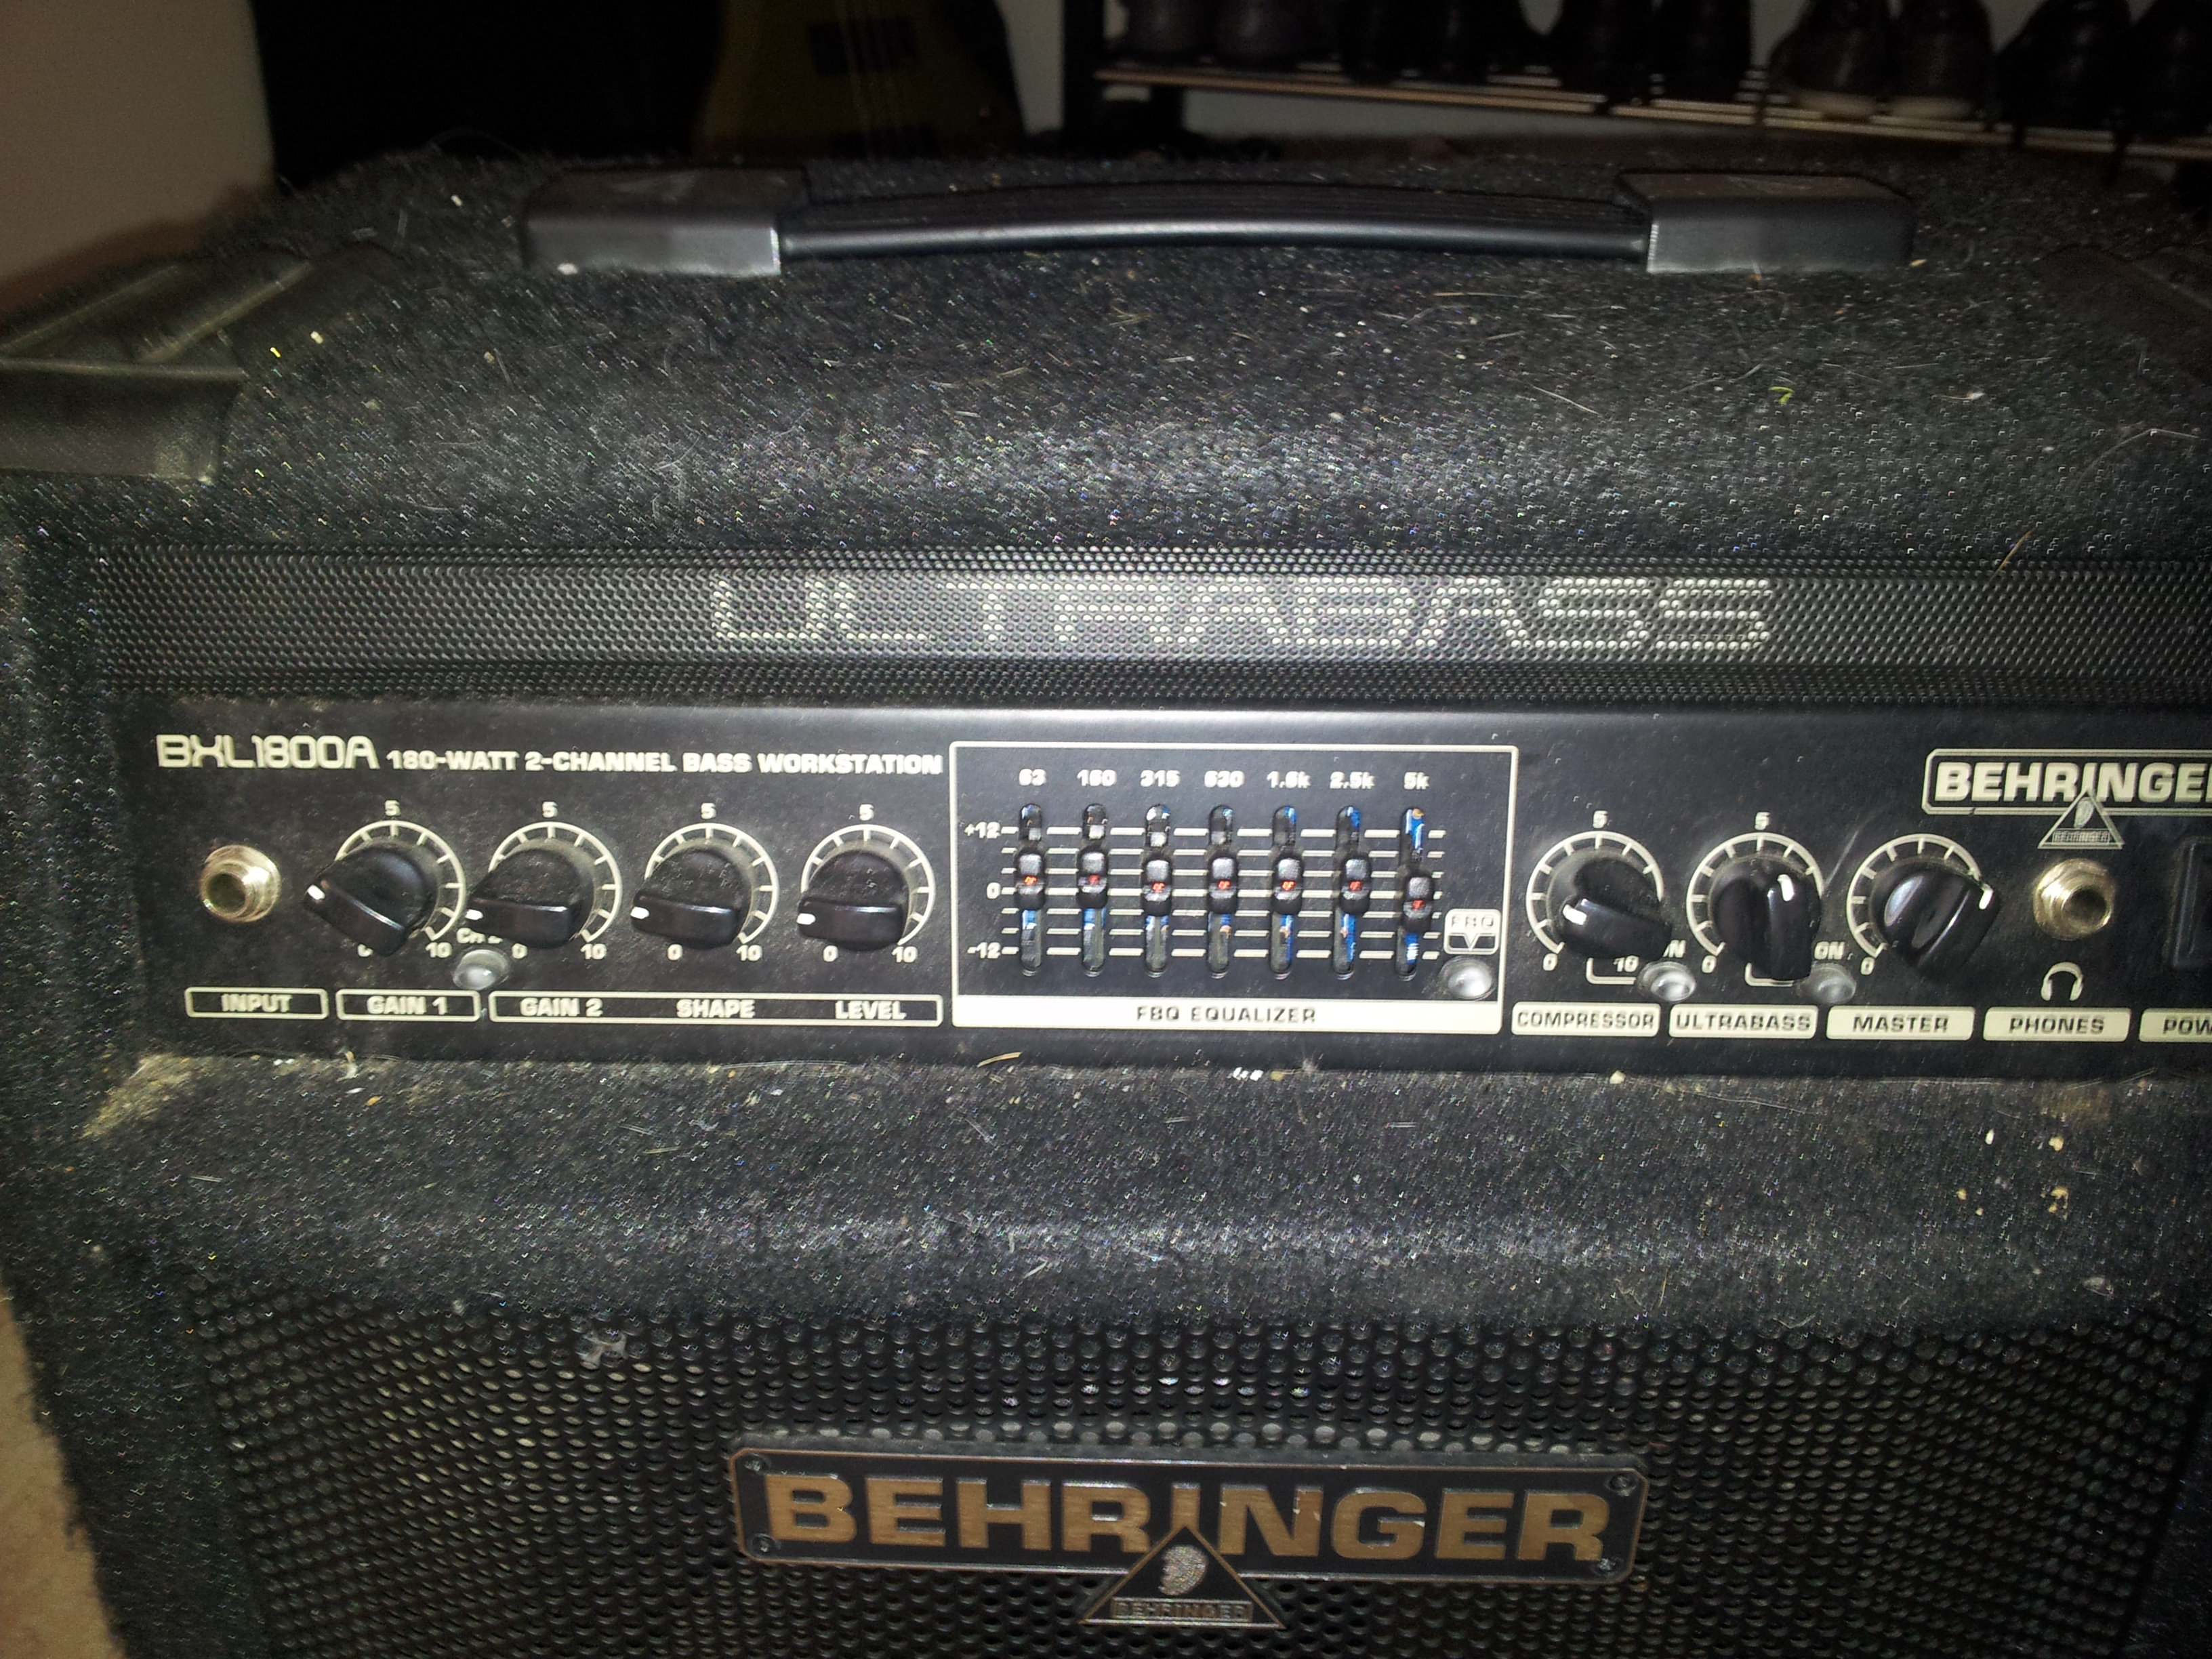 Behringer Ultrabass Bxl1800a Image 453902 Audiofanzine